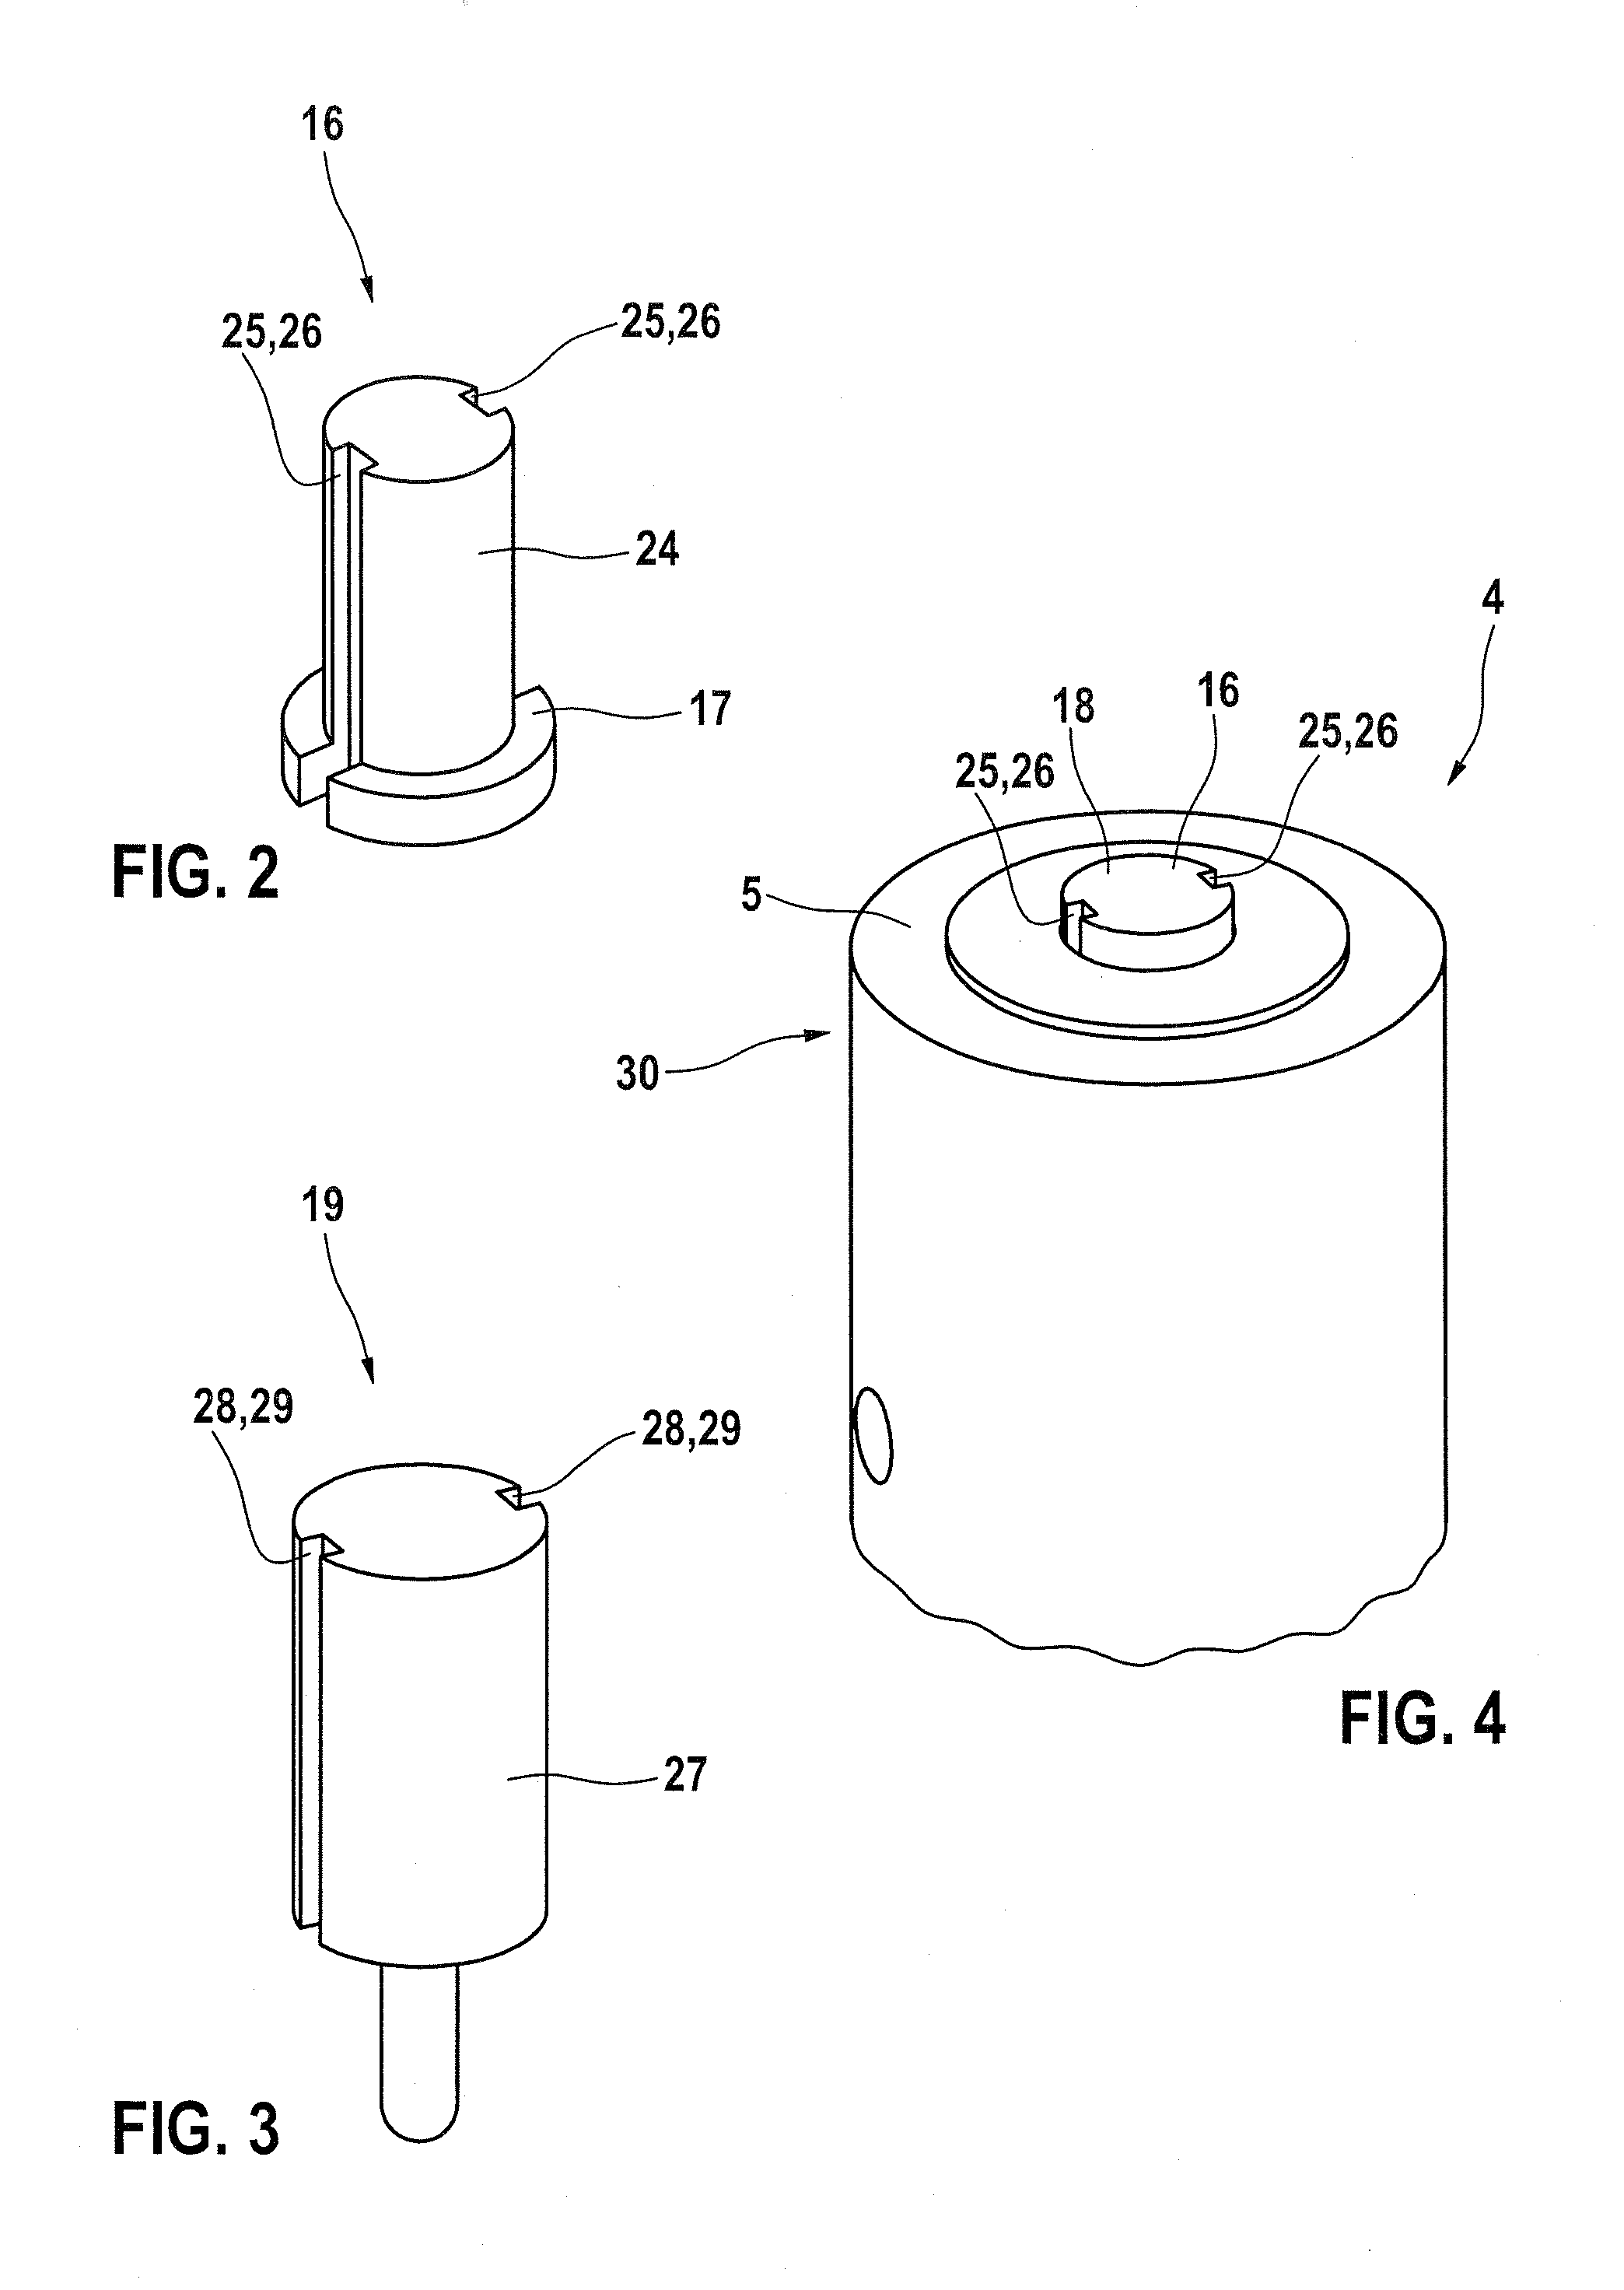 Solenoid valve, armature for a solenoid valve, and method for producing an armature for a solenoid valve